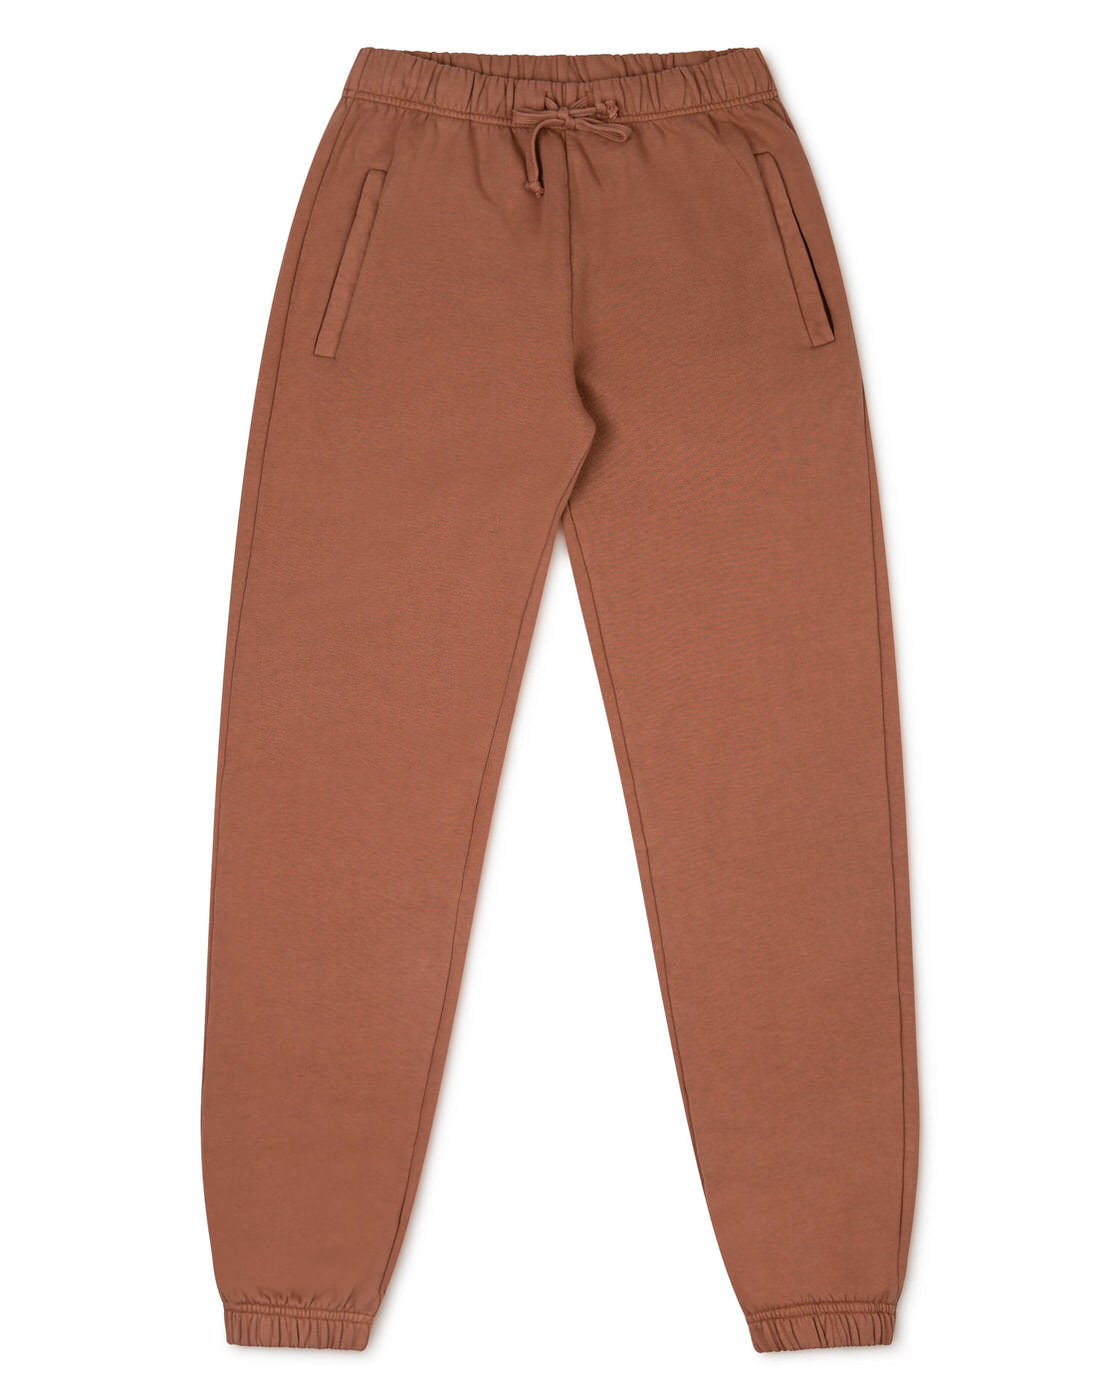 Pantalon de jogging en cèdre marron en molleton de coton biologique de Matona